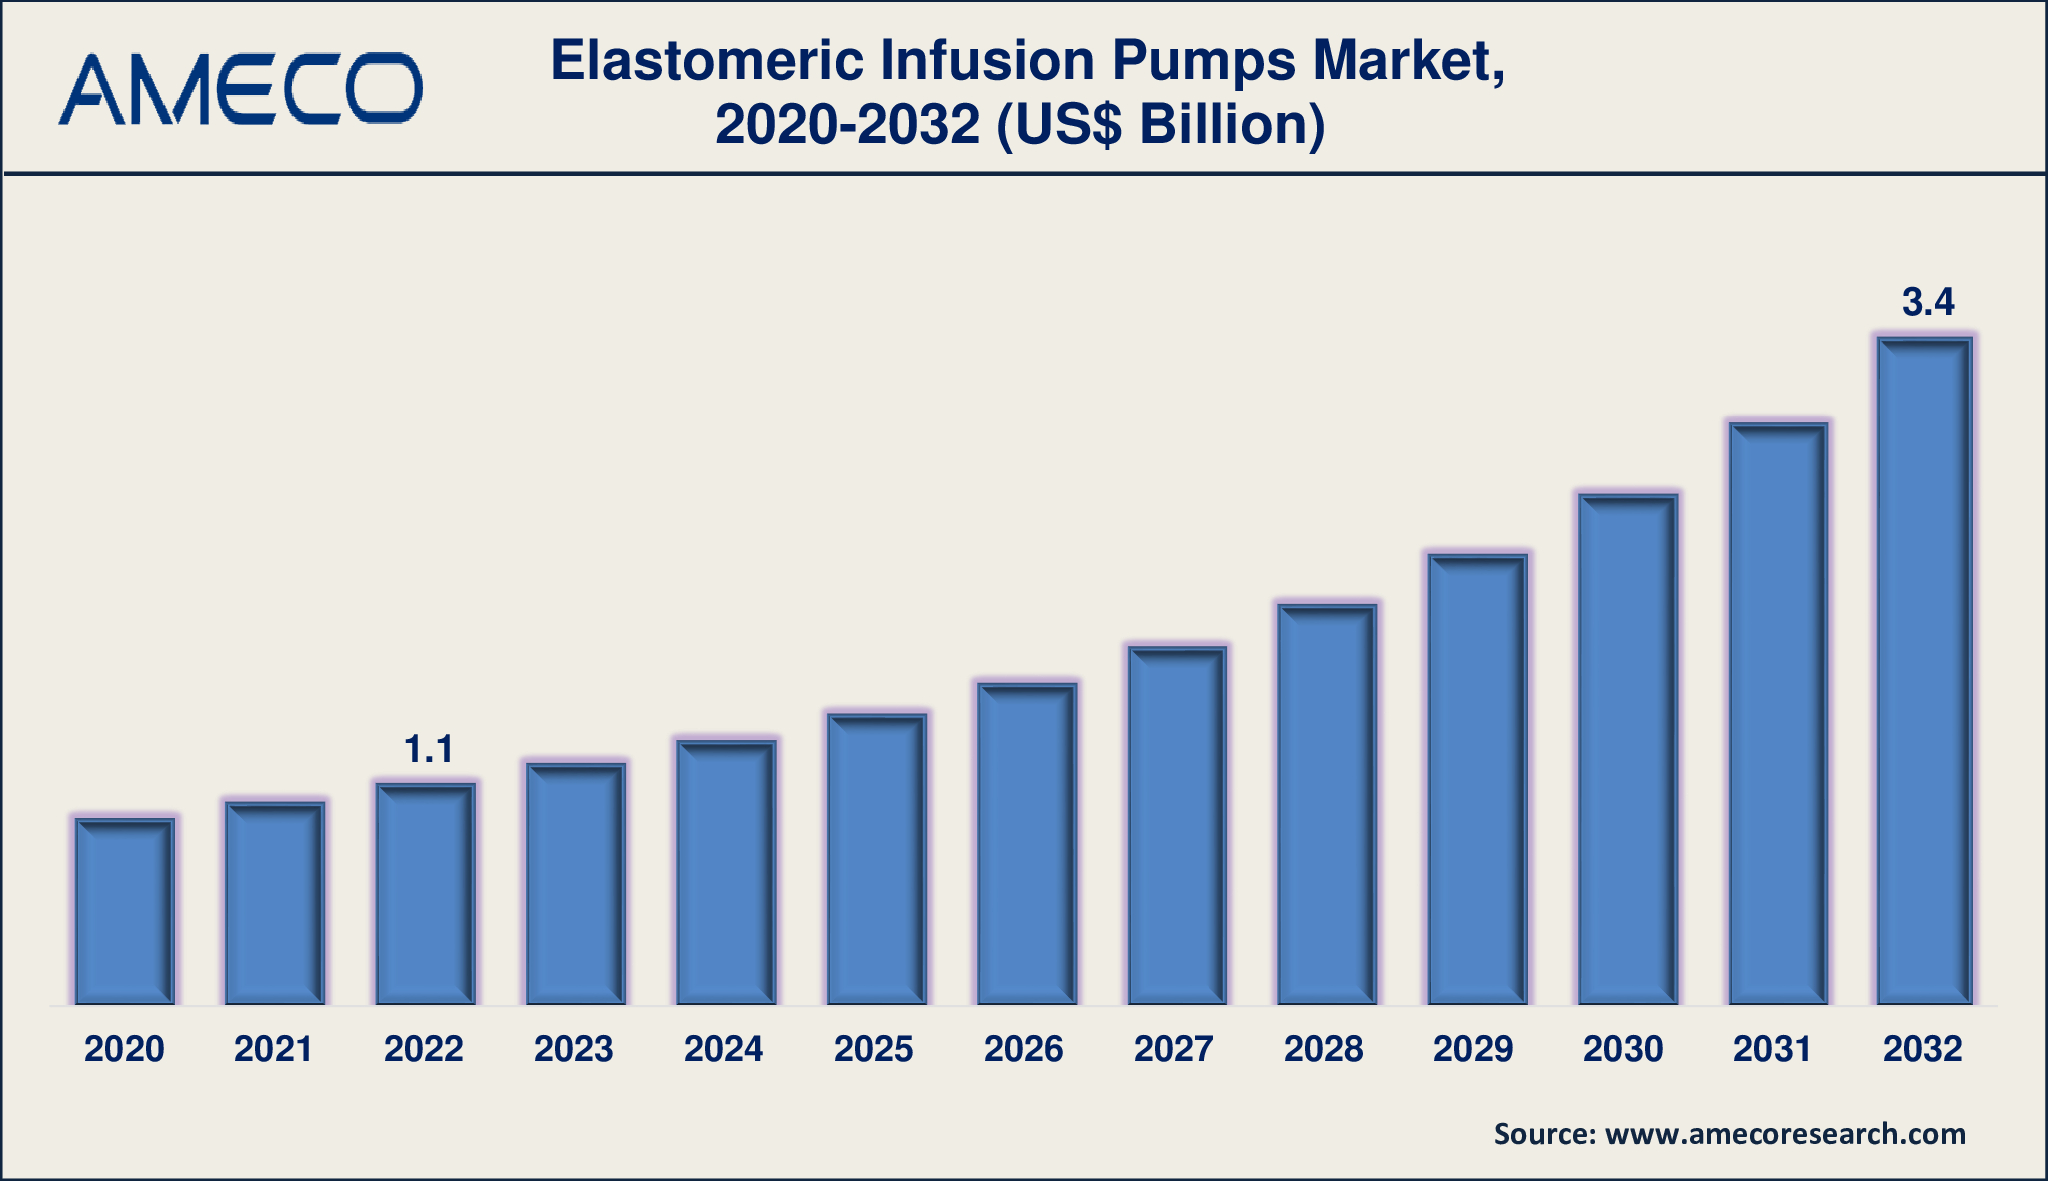 Elastomeric Infusion Pumps Market Dynamics